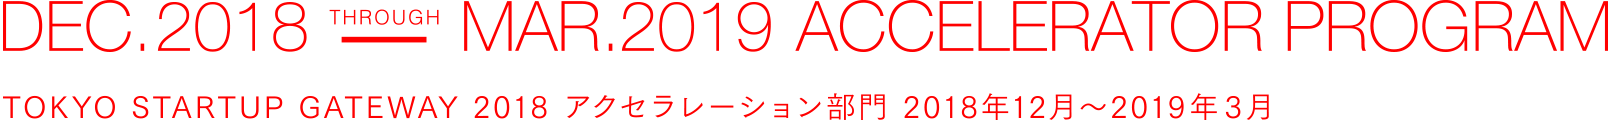 TOKYO STARTUP GATEWAY 2018 アクセラレーション部門 2018年12月〜2019年3月